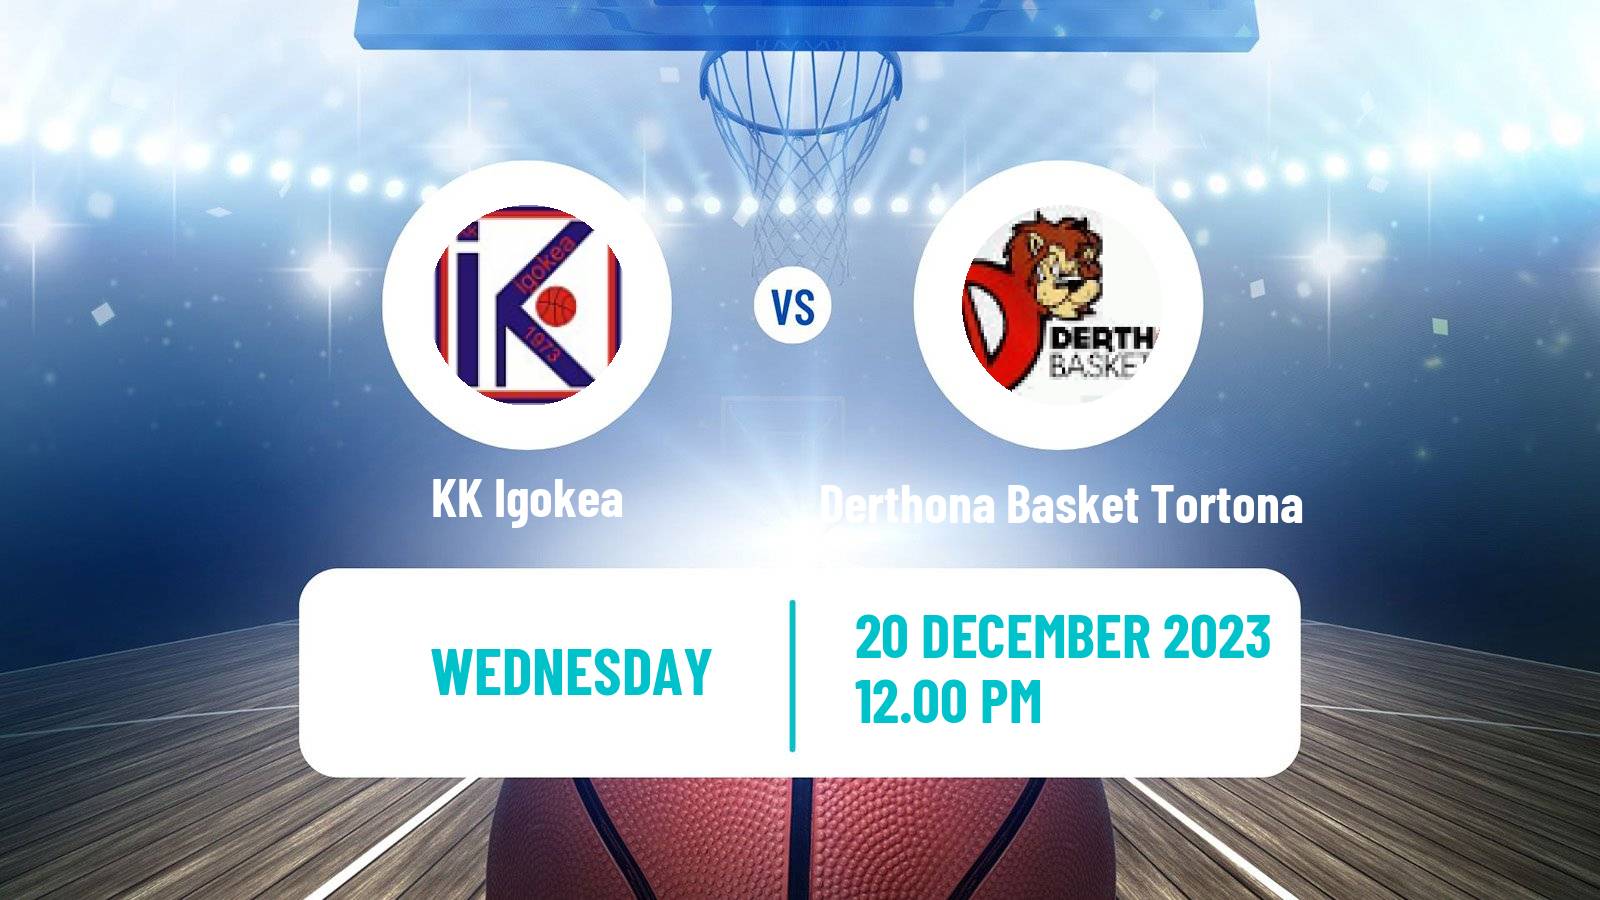 Basketball Champions League Basketball Igokea - Derthona Basket Tortona